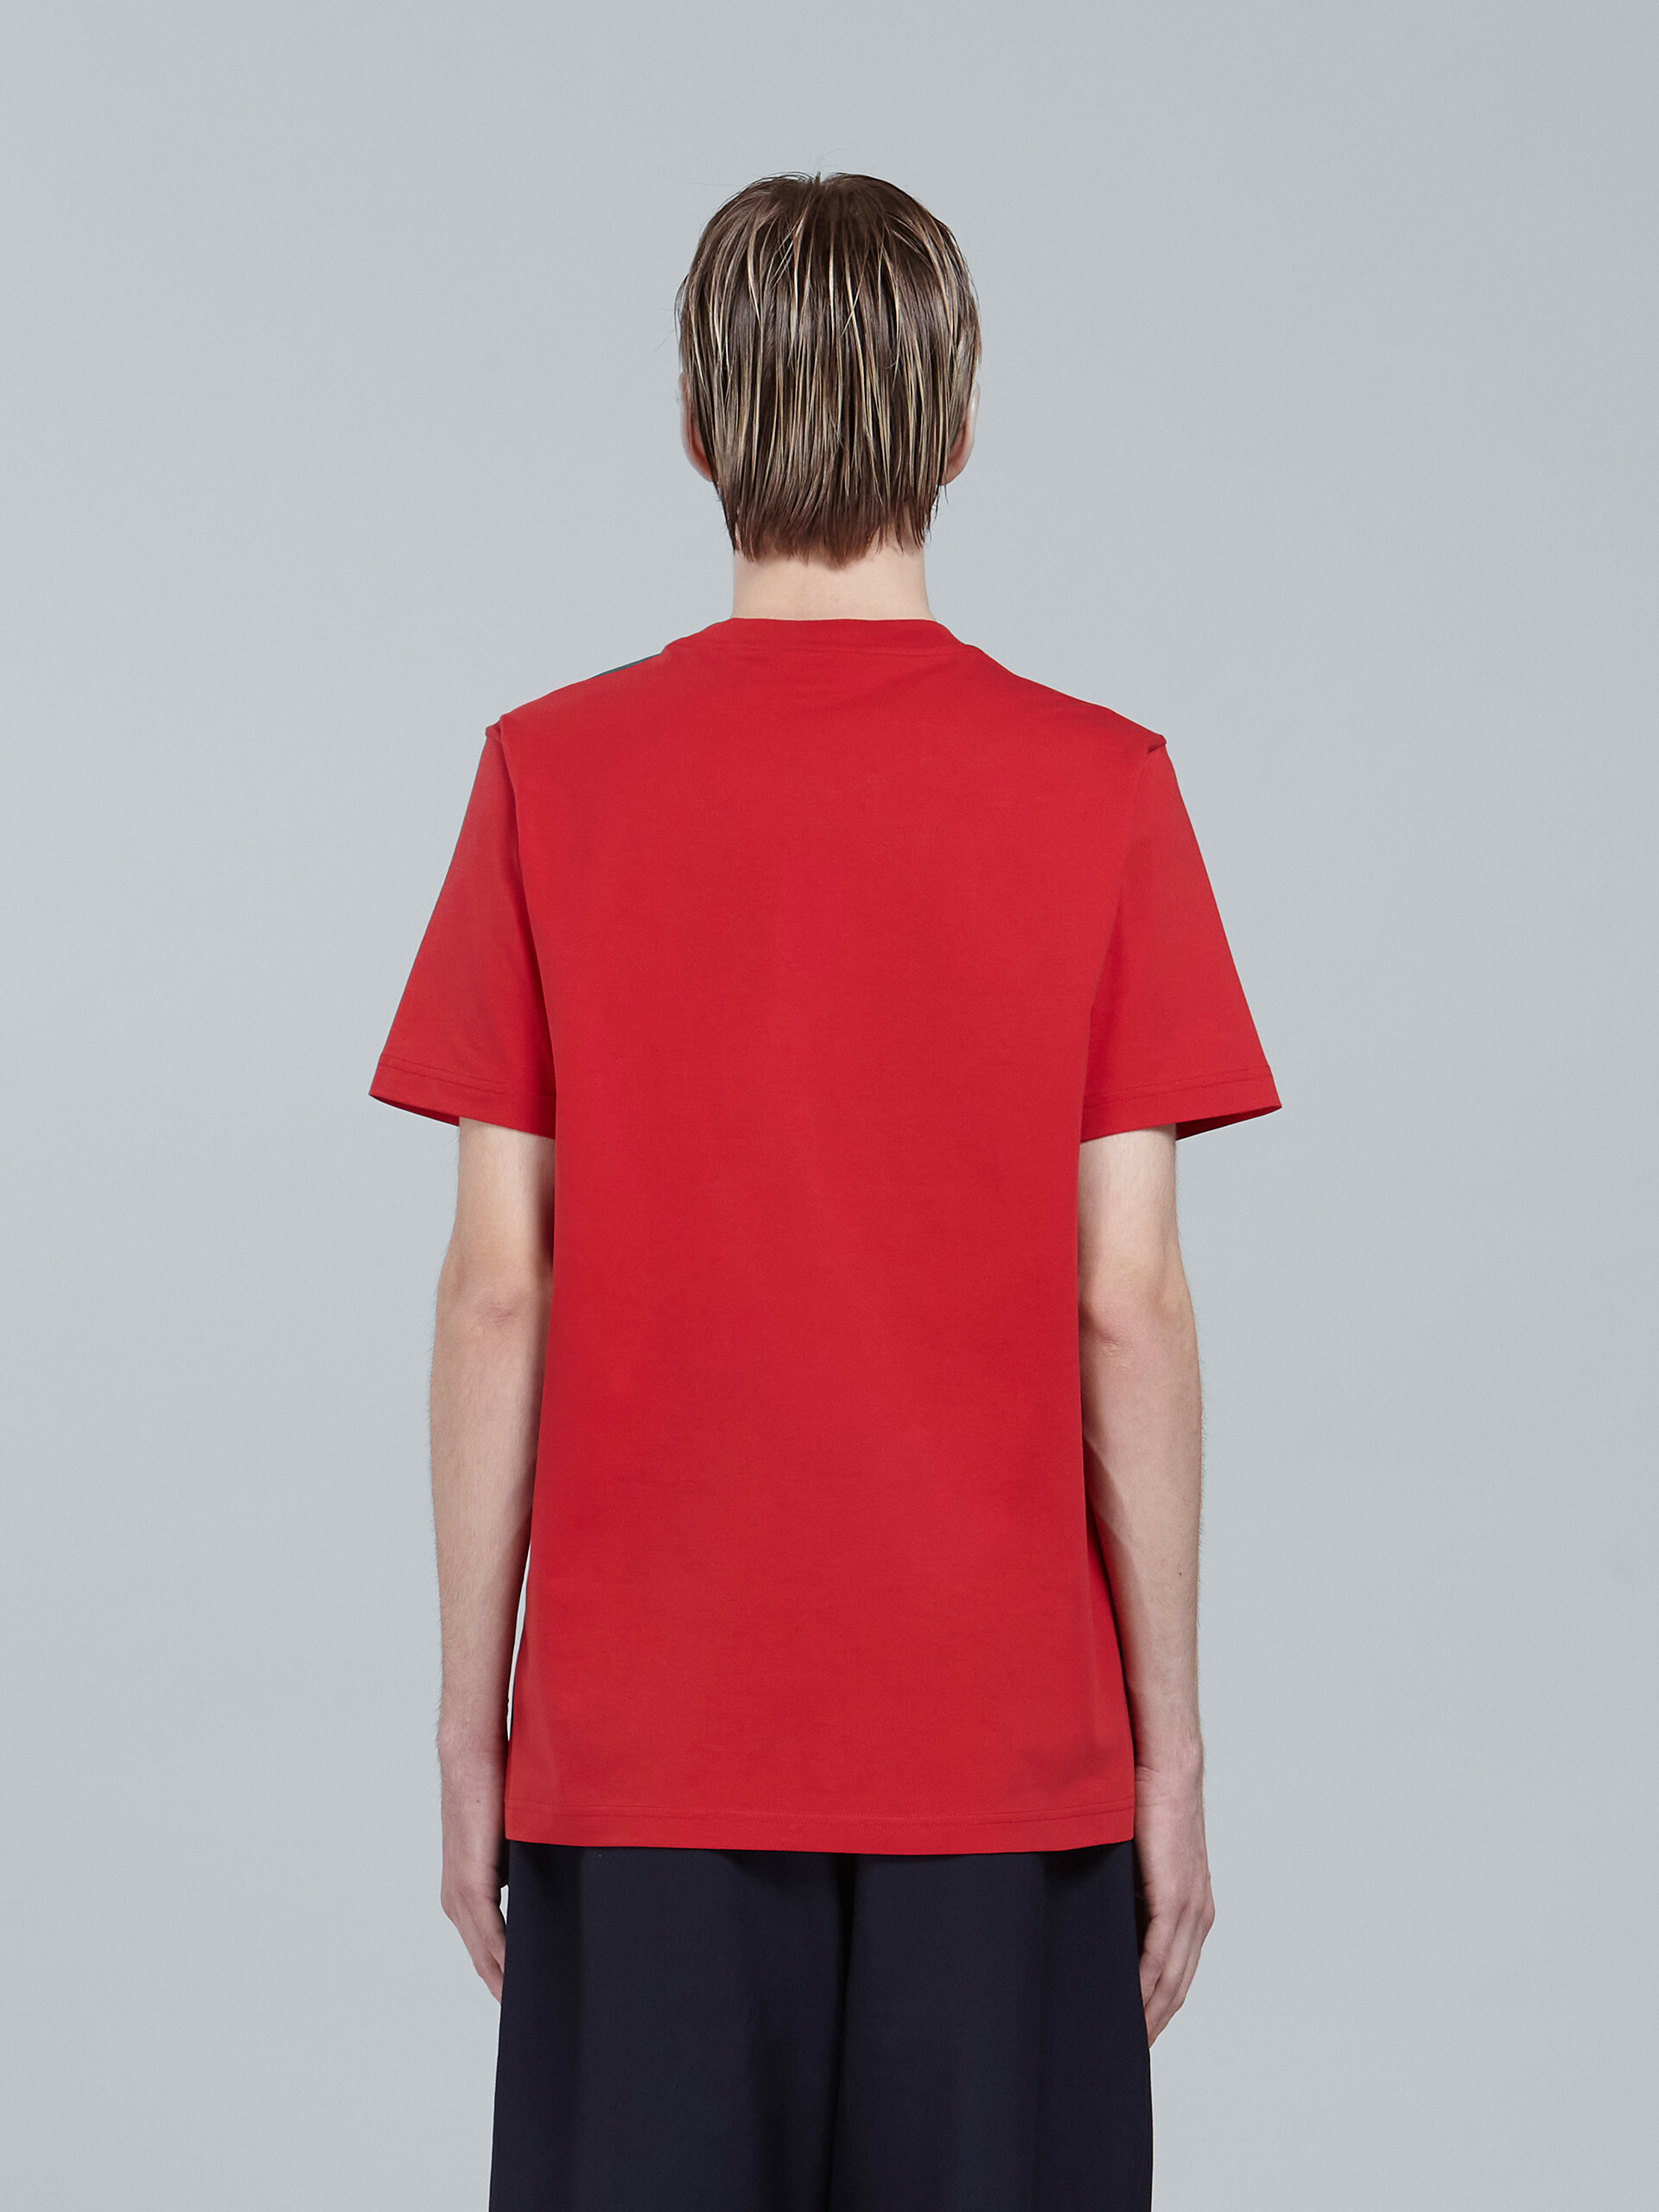 Scanned Logo print red jersey T-shirt - T-shirts - Image 3